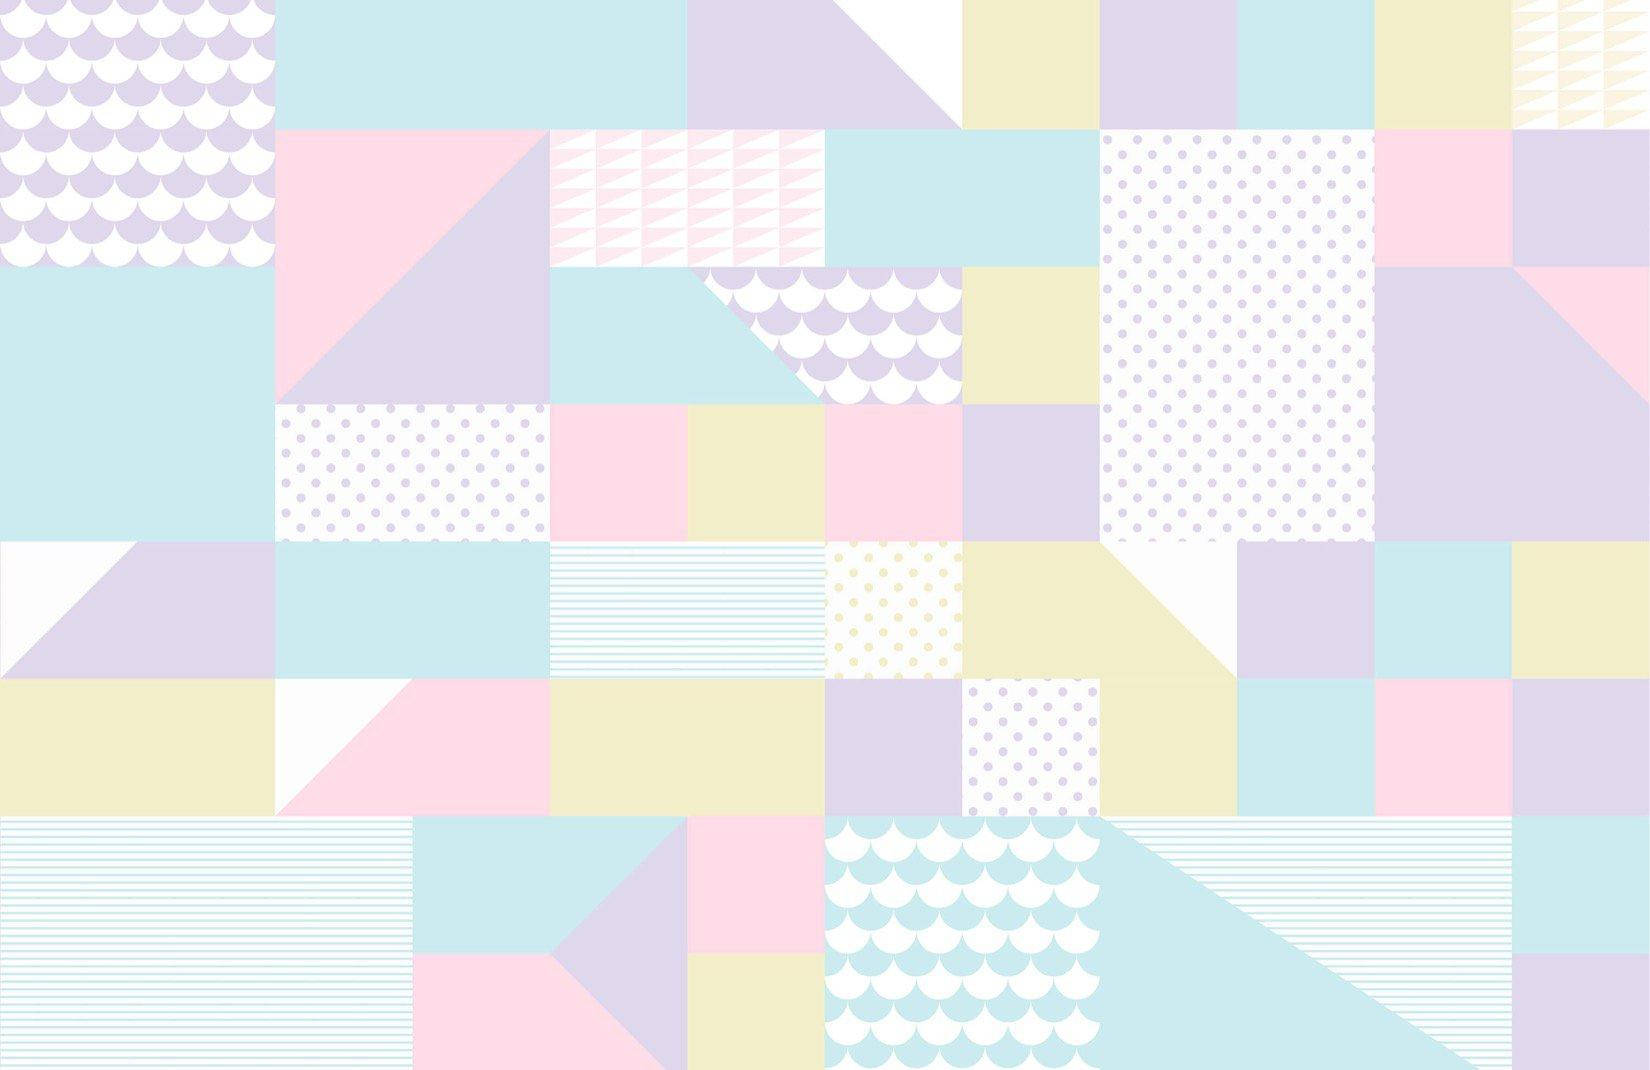 Soft, calming colors adorn this dreamy pastel aesthetic desktop Wallpaper